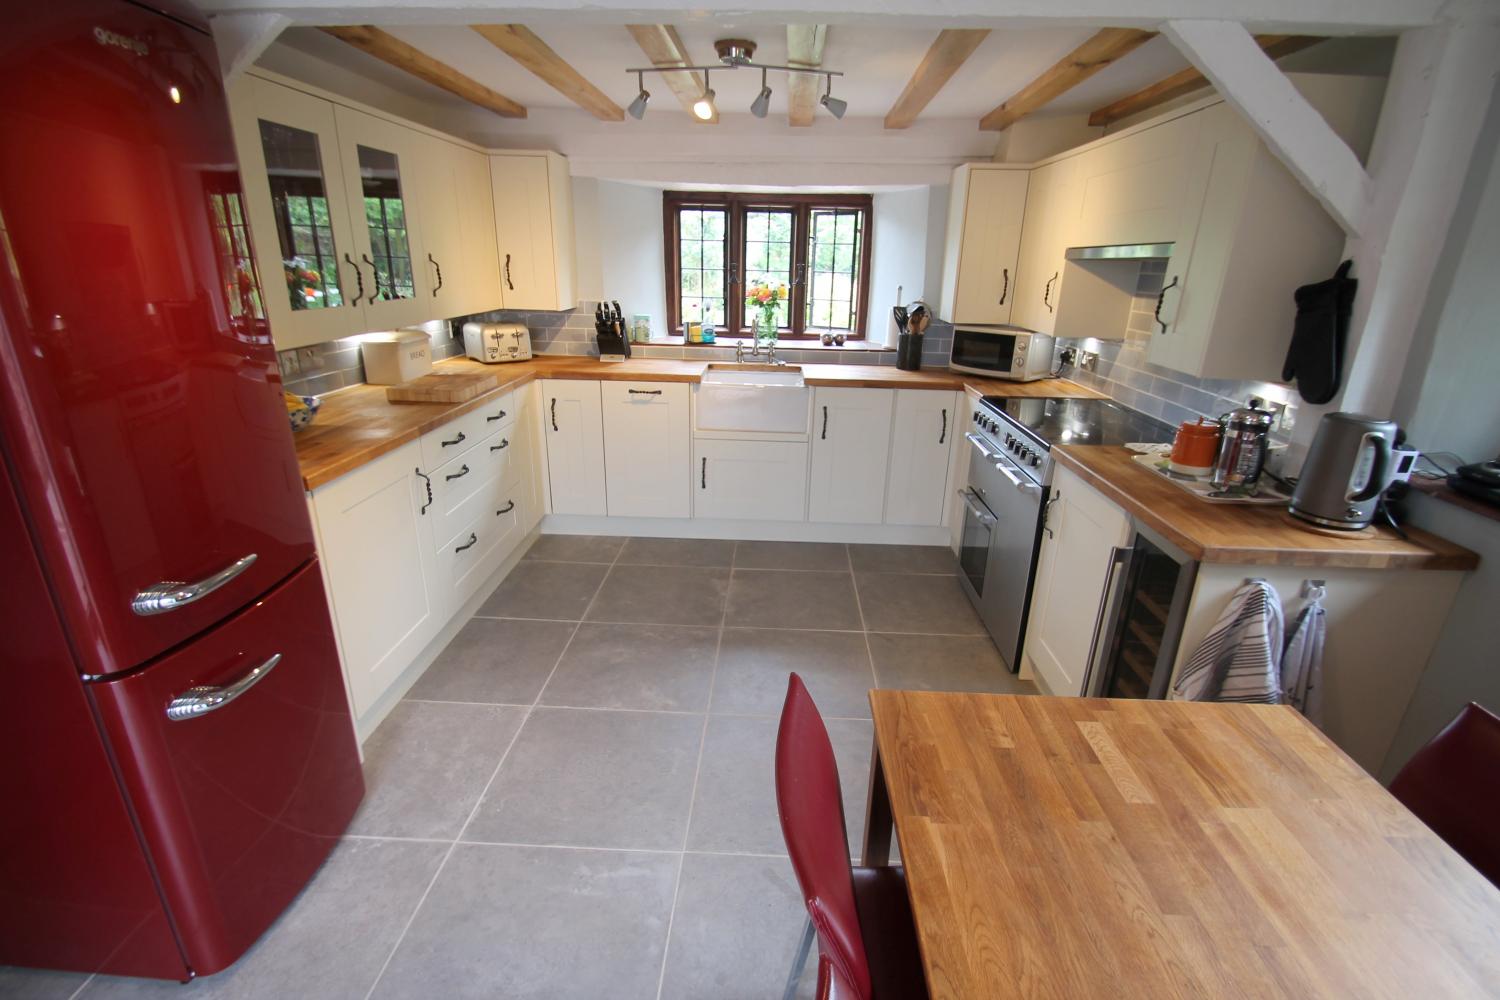 Winder Cottage kitchen-dining room